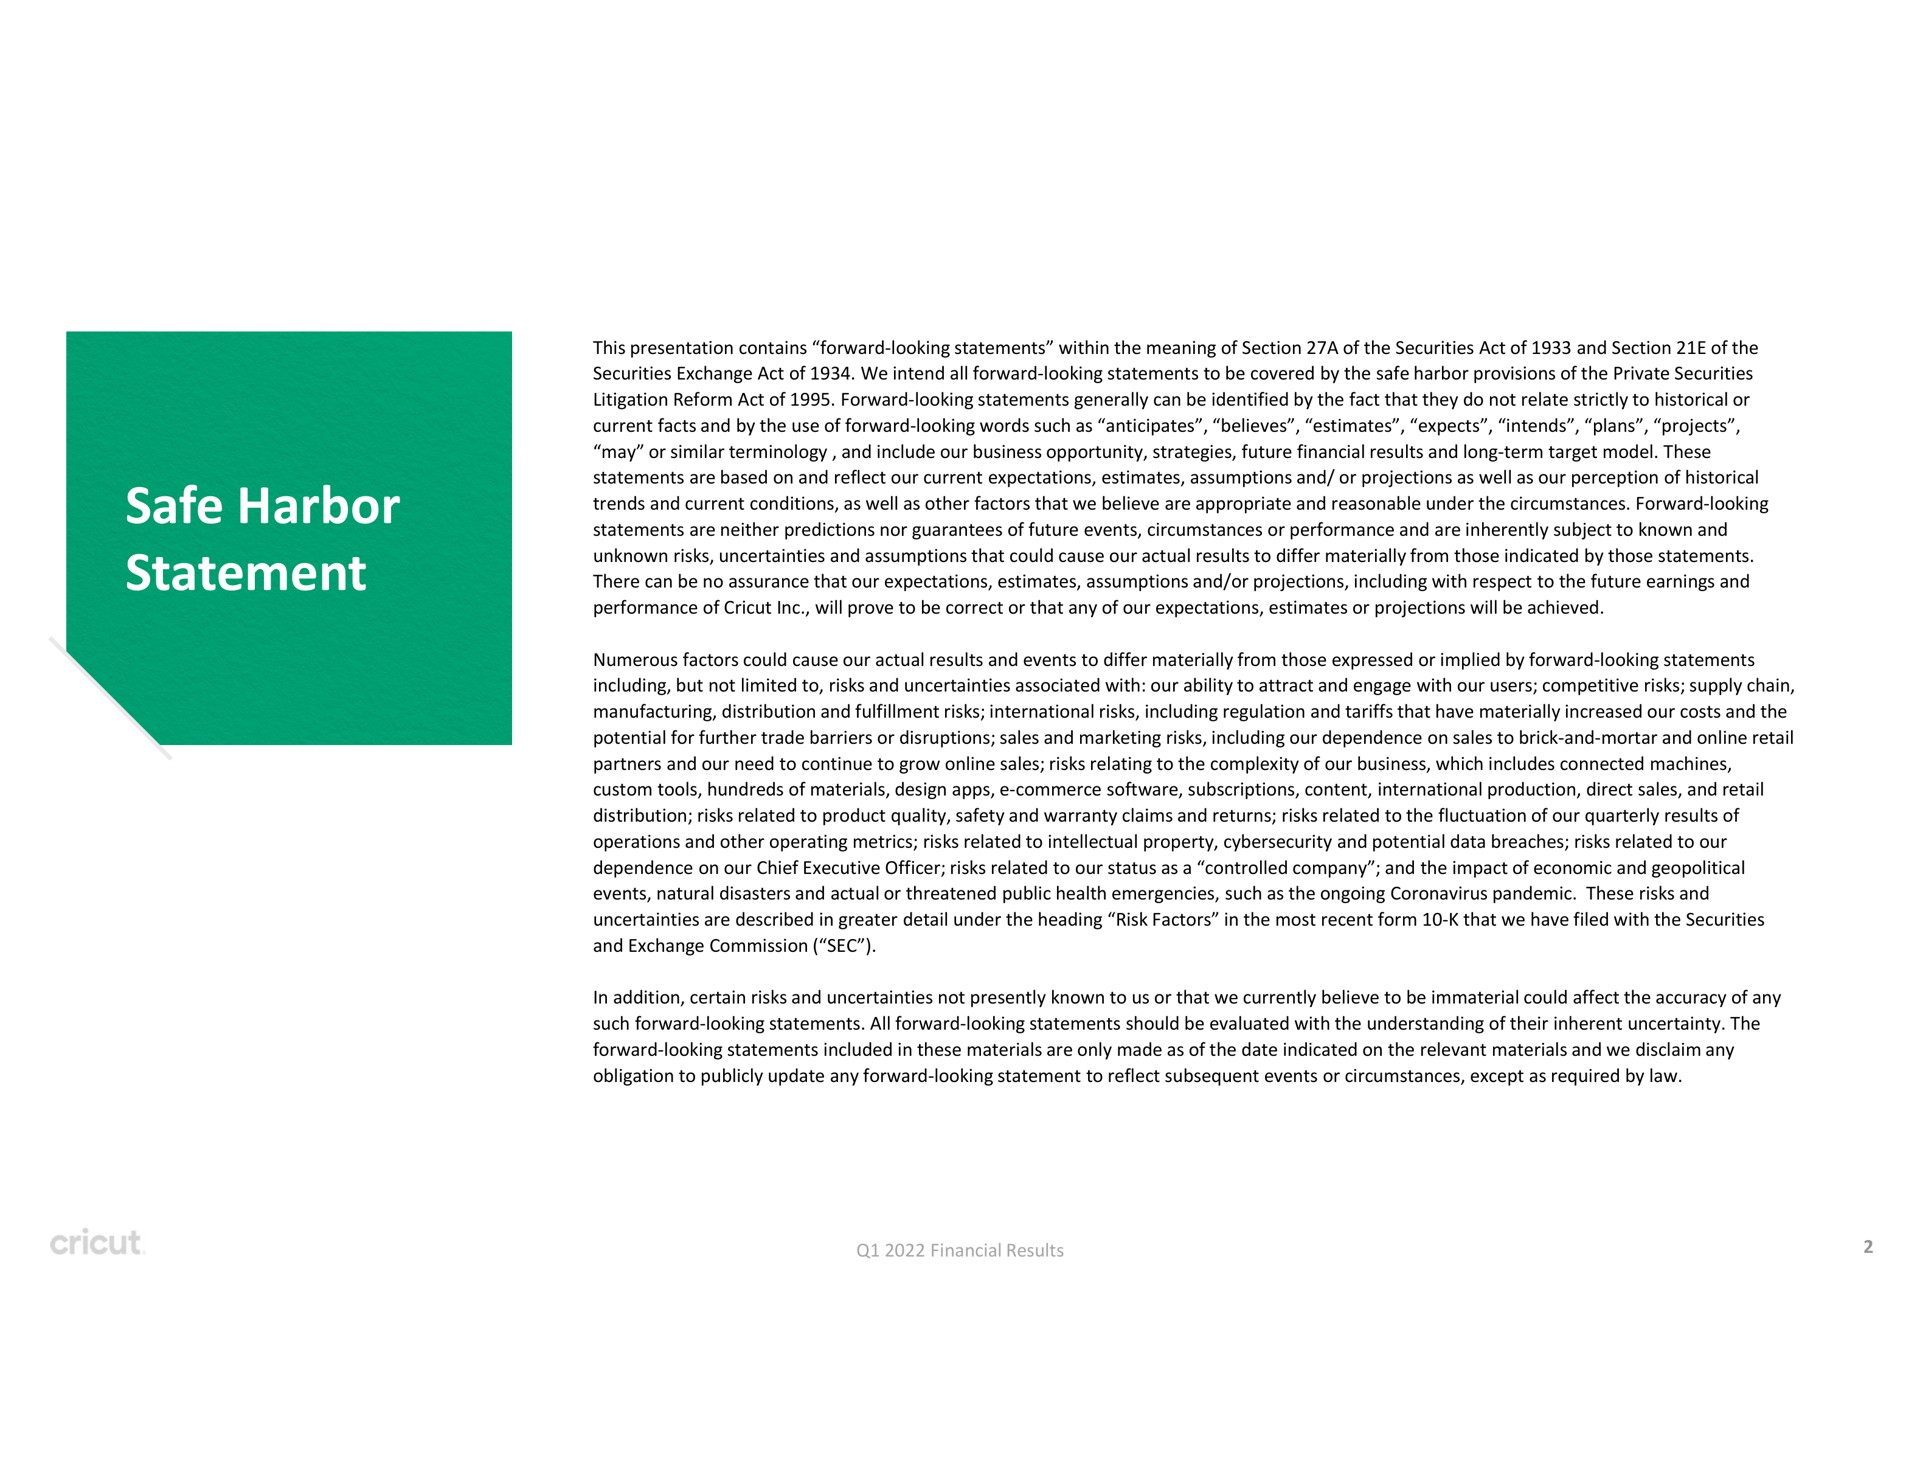 safe harbor statement | Circut